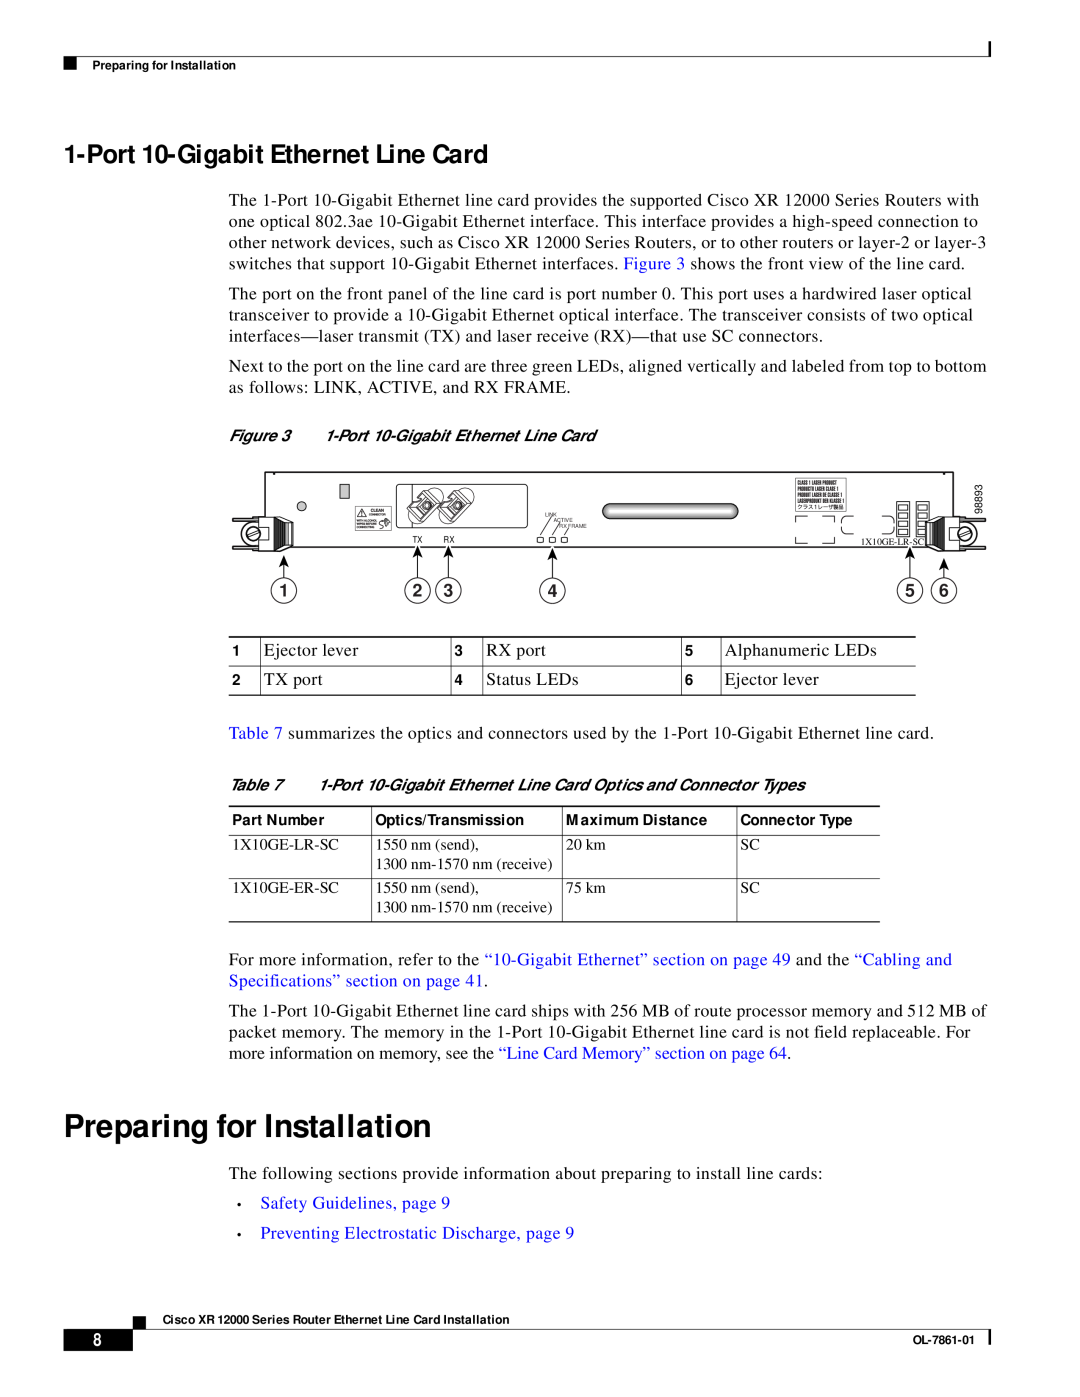 Cisco Systems OL-7861-01 manual Preparing for Installation, Port 10-Gigabit Ethernet Line Card 